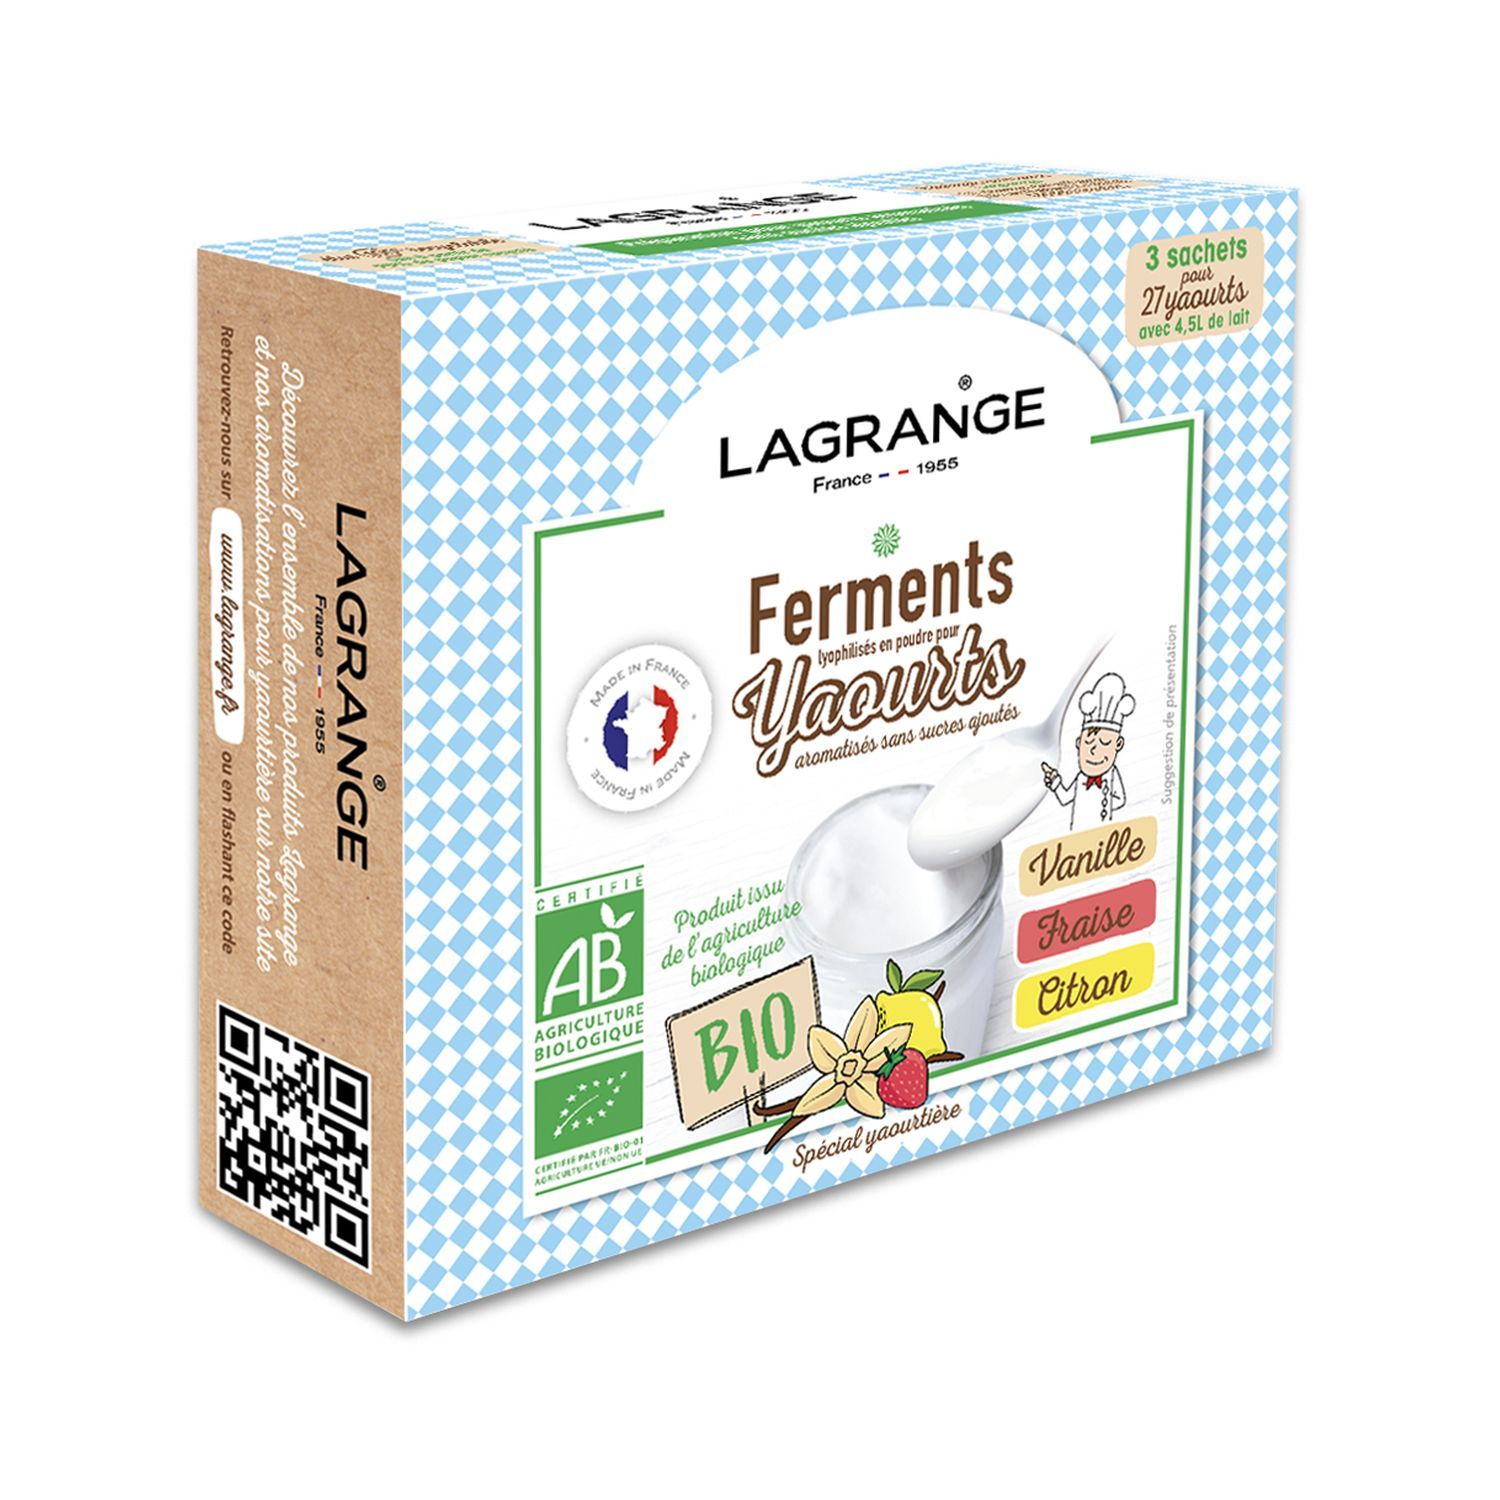 Aromatisation yaourt vanille LAGRANGE 380310 LAGRANGE Pas Cher 